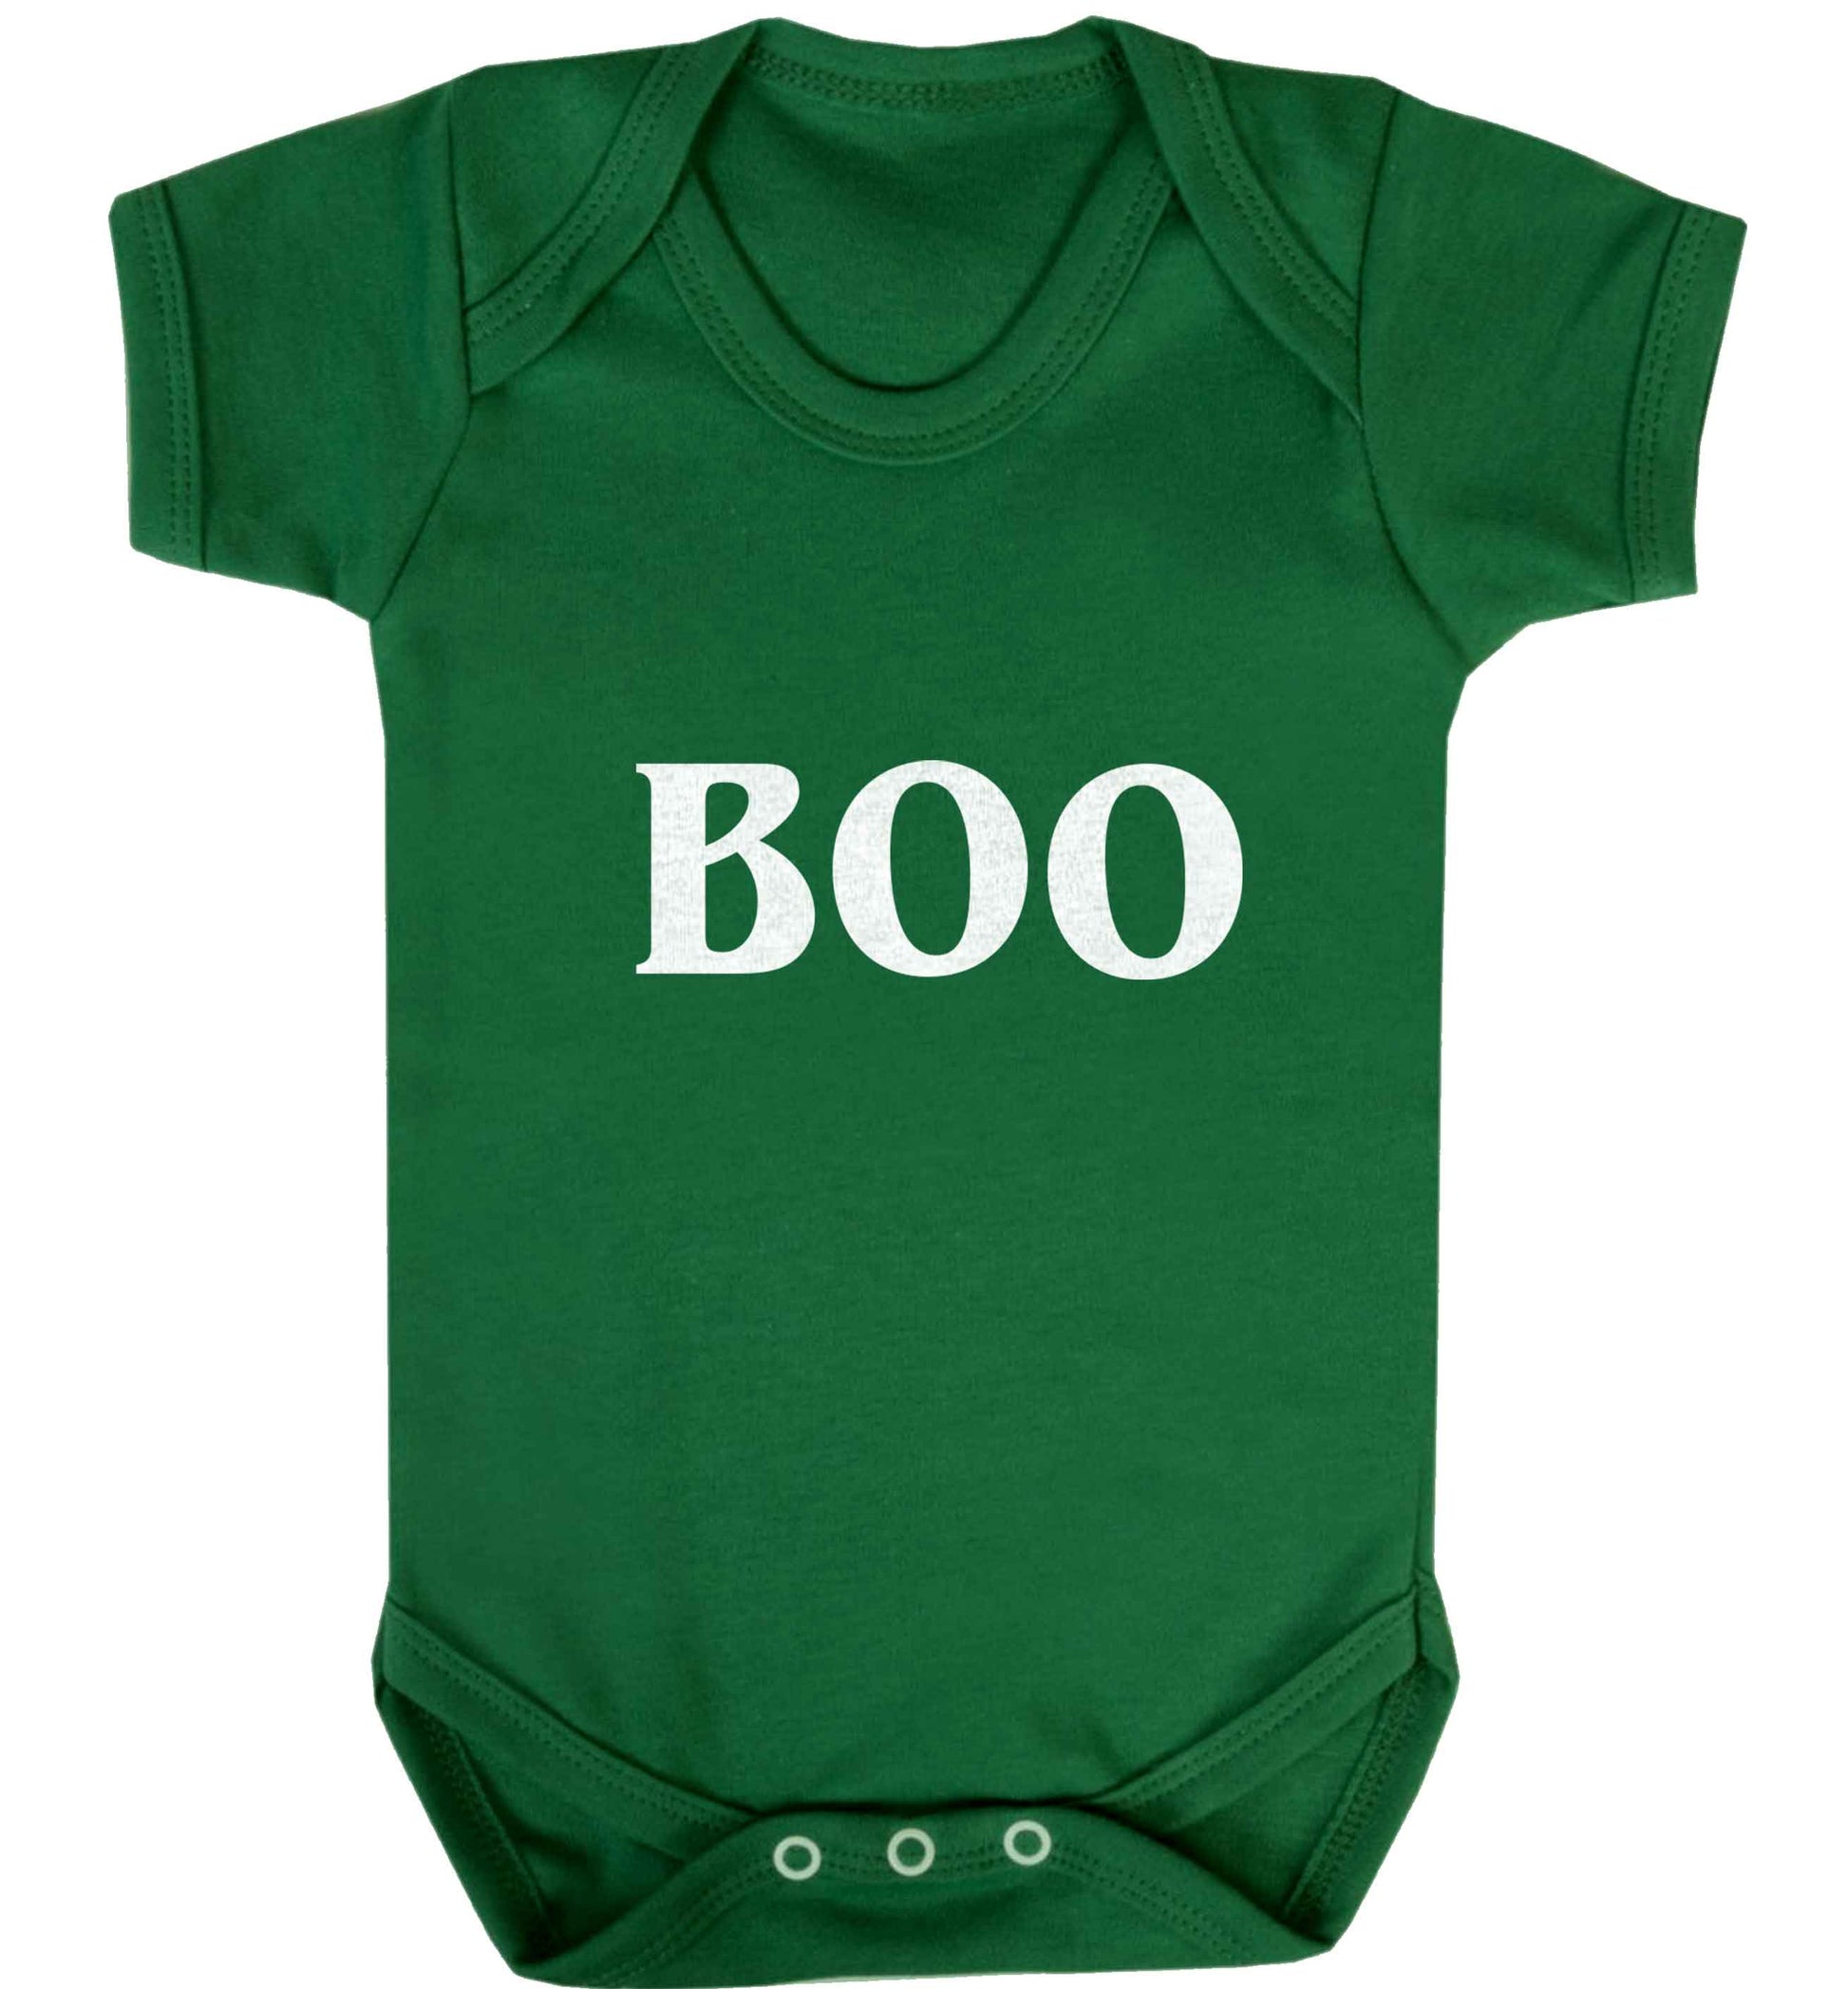 Boo baby vest green 18-24 months